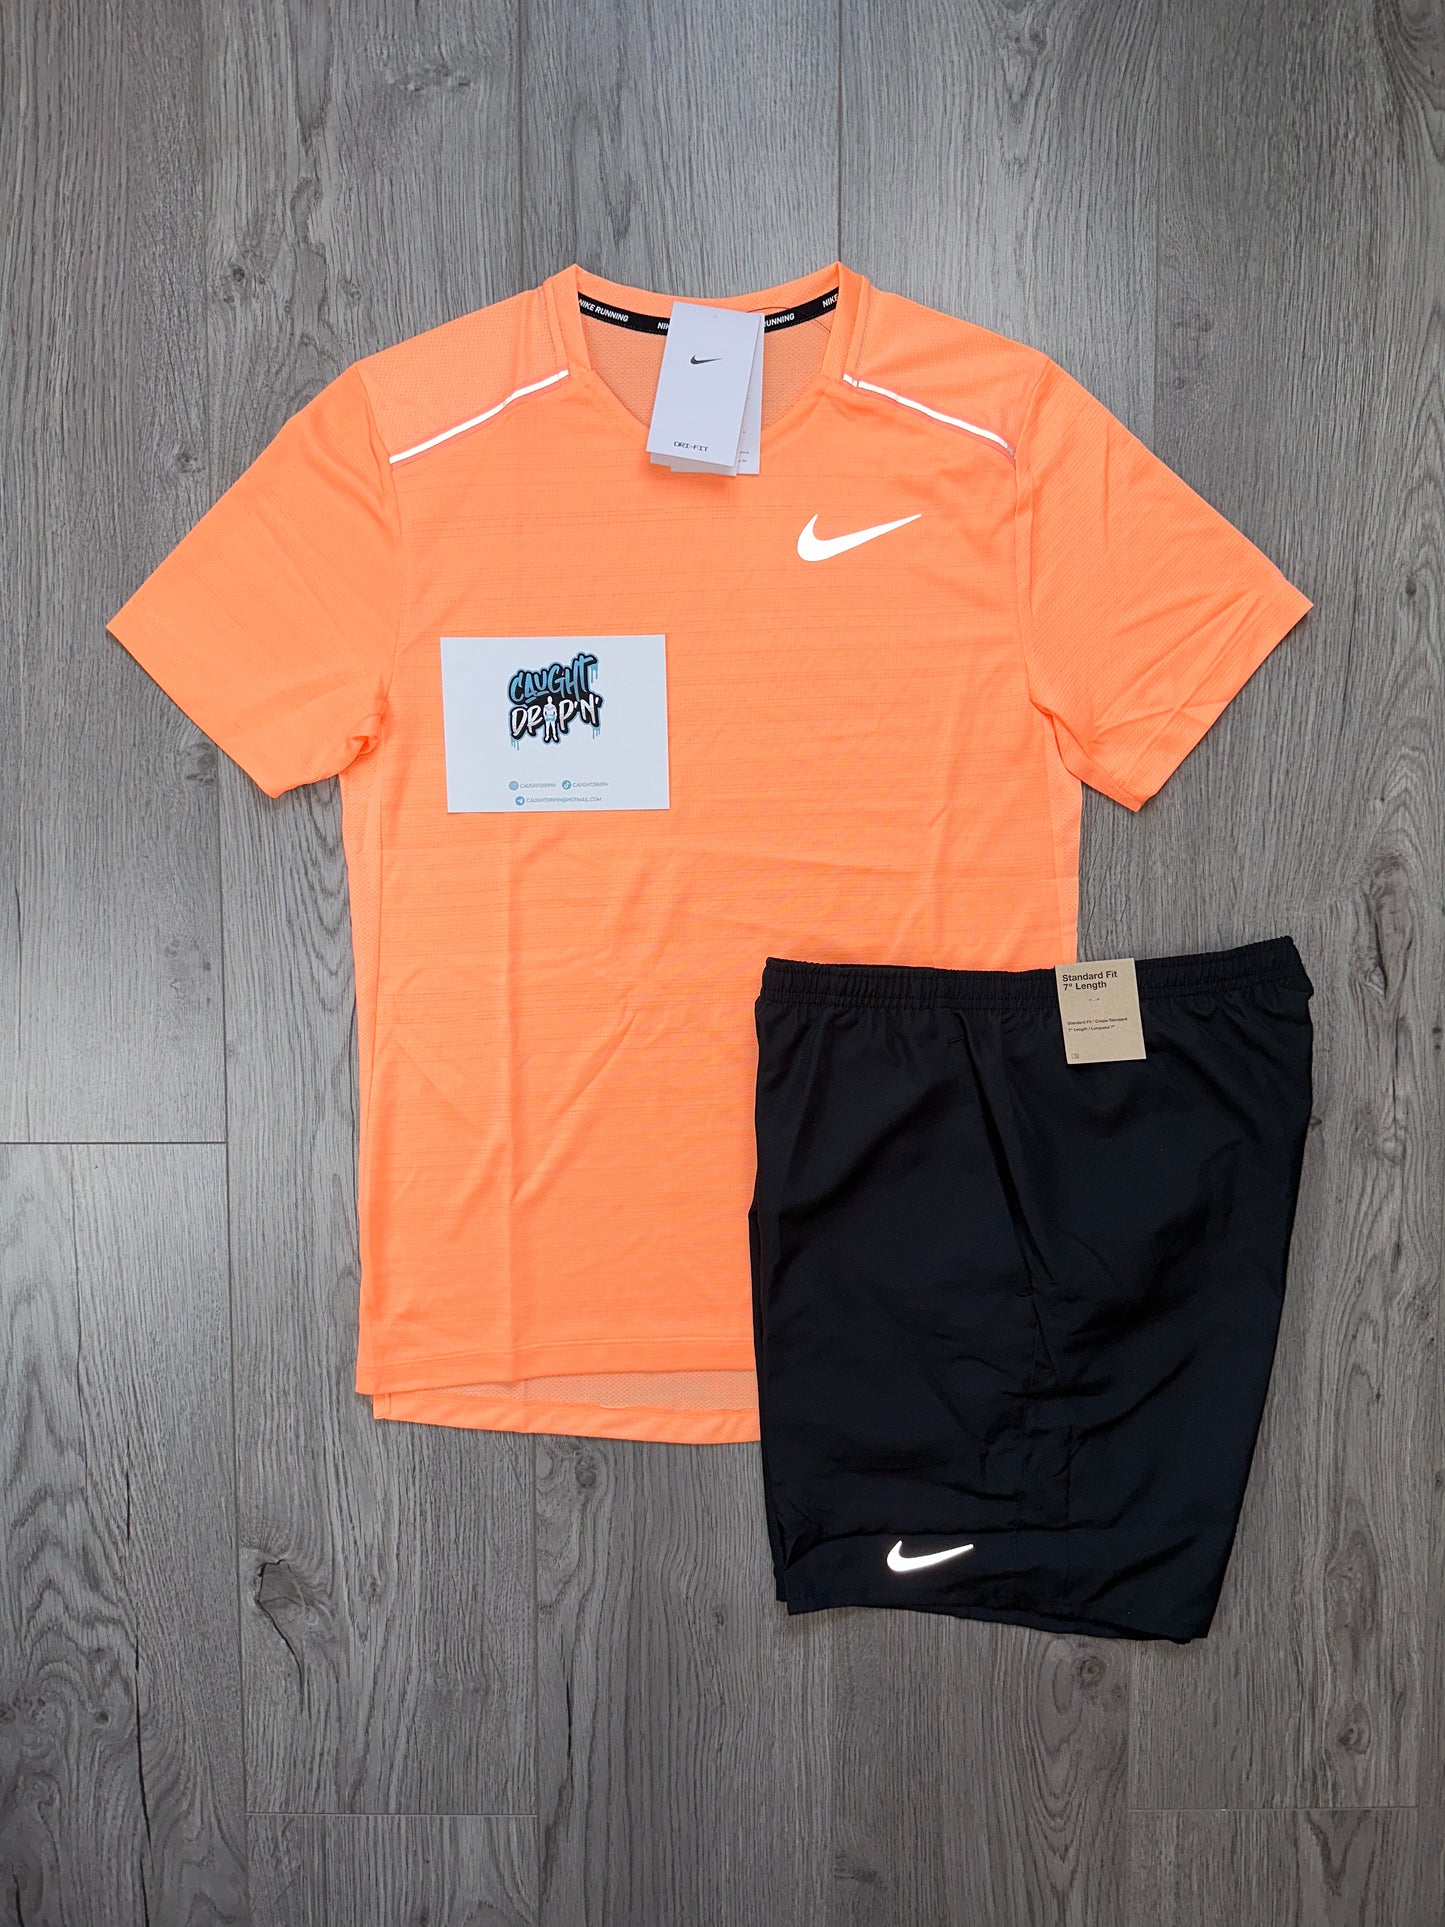 OG Nike Miler Peach Set